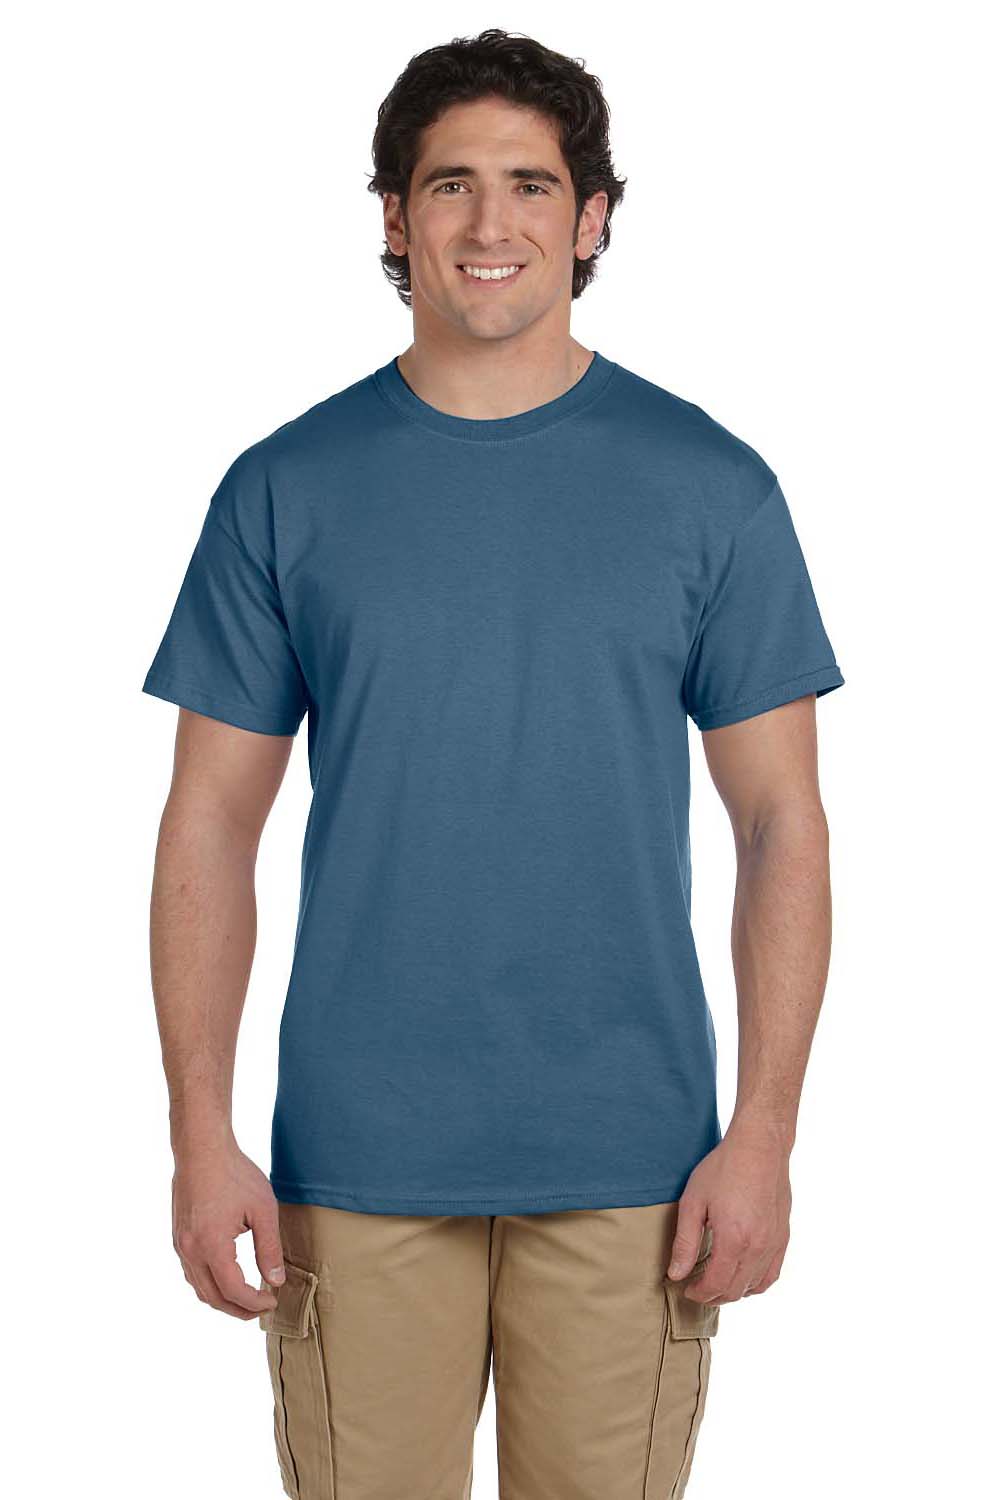 Hanes 5170 Mens EcoSmart Short Sleeve Crewneck T-Shirt Denim Blue Front